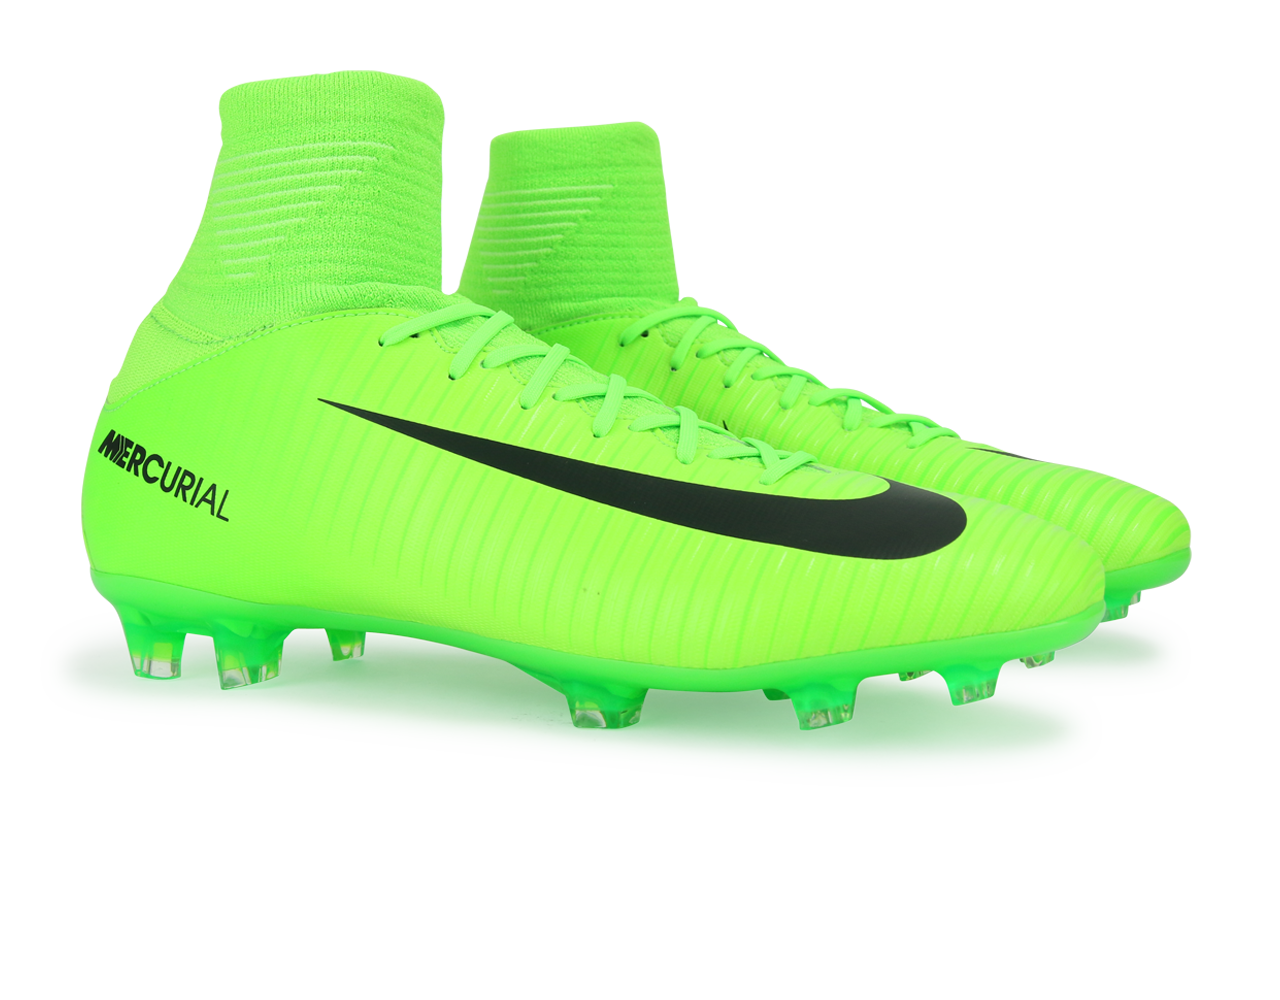 Nike Kids Mercurial Superfly V FG Electric Green/Black/Flash Lime